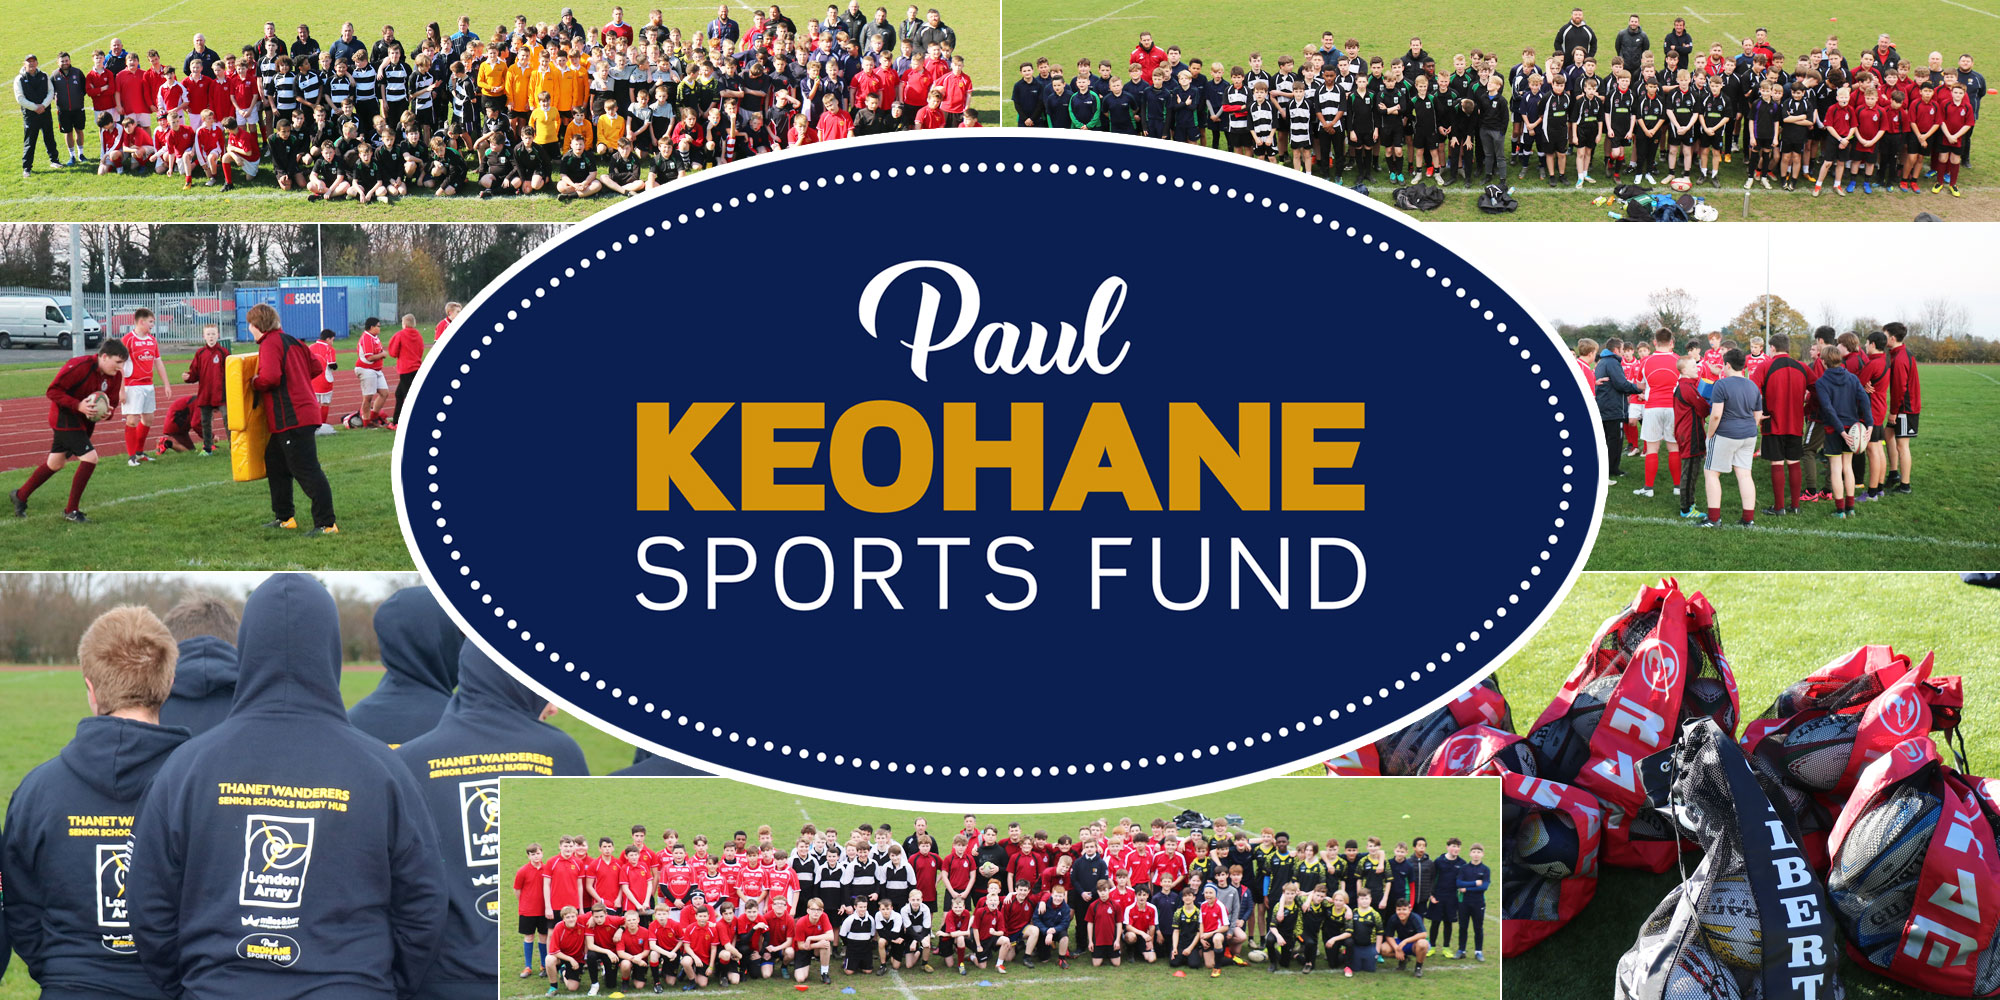 Paul Keohane Sports Fund logo on grass background